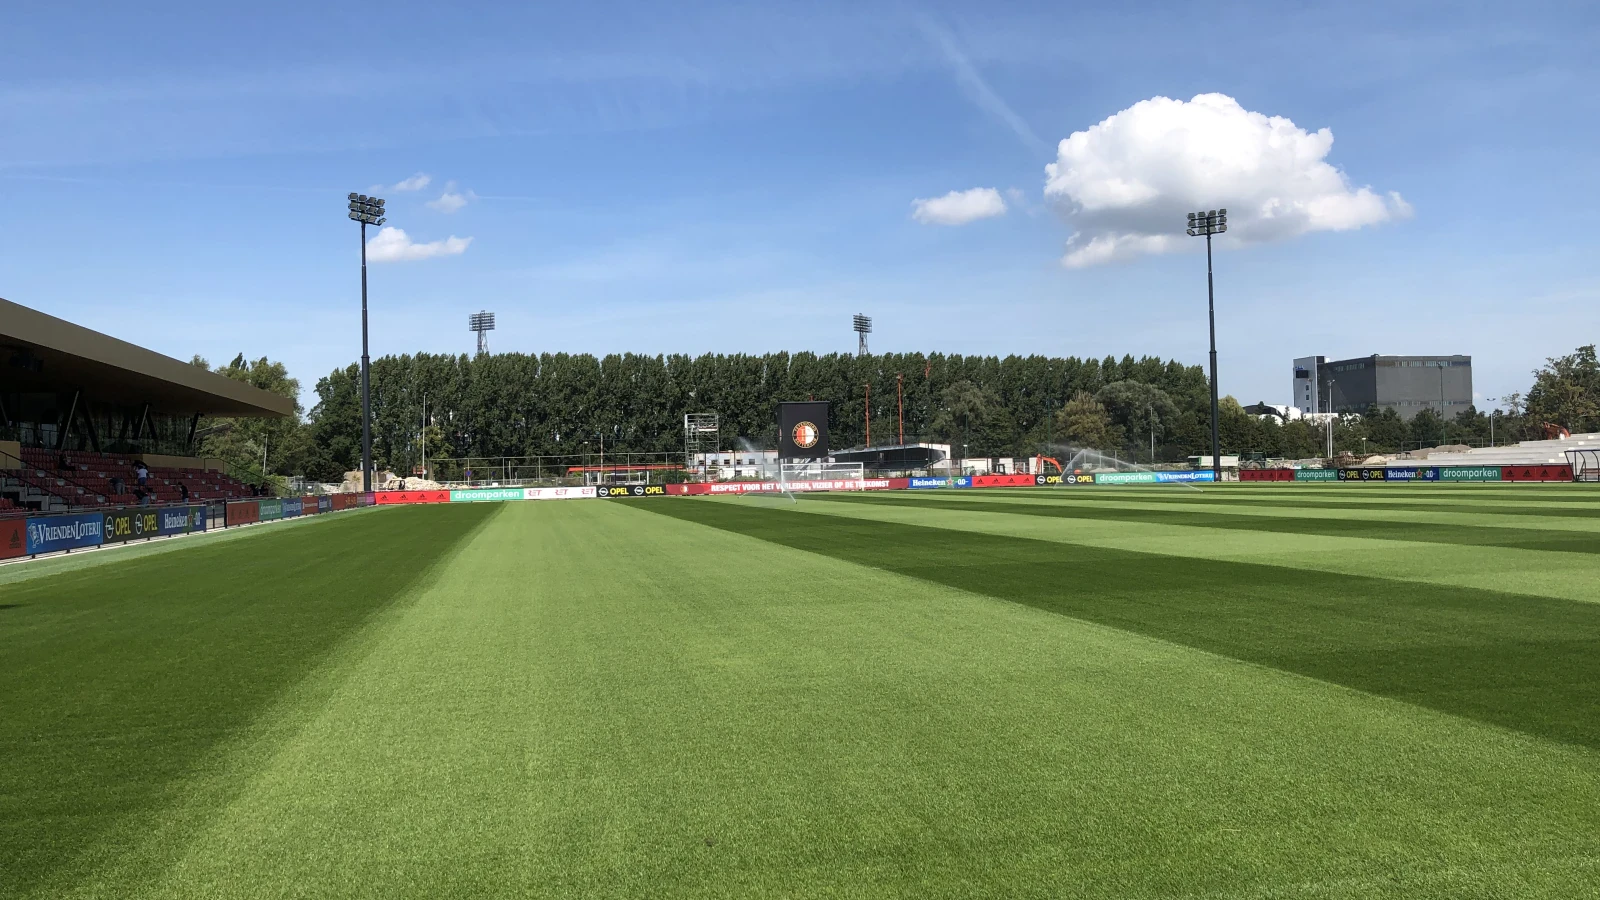 Programma tweede seizoenshelft Feyenoord Onder 21 bekend